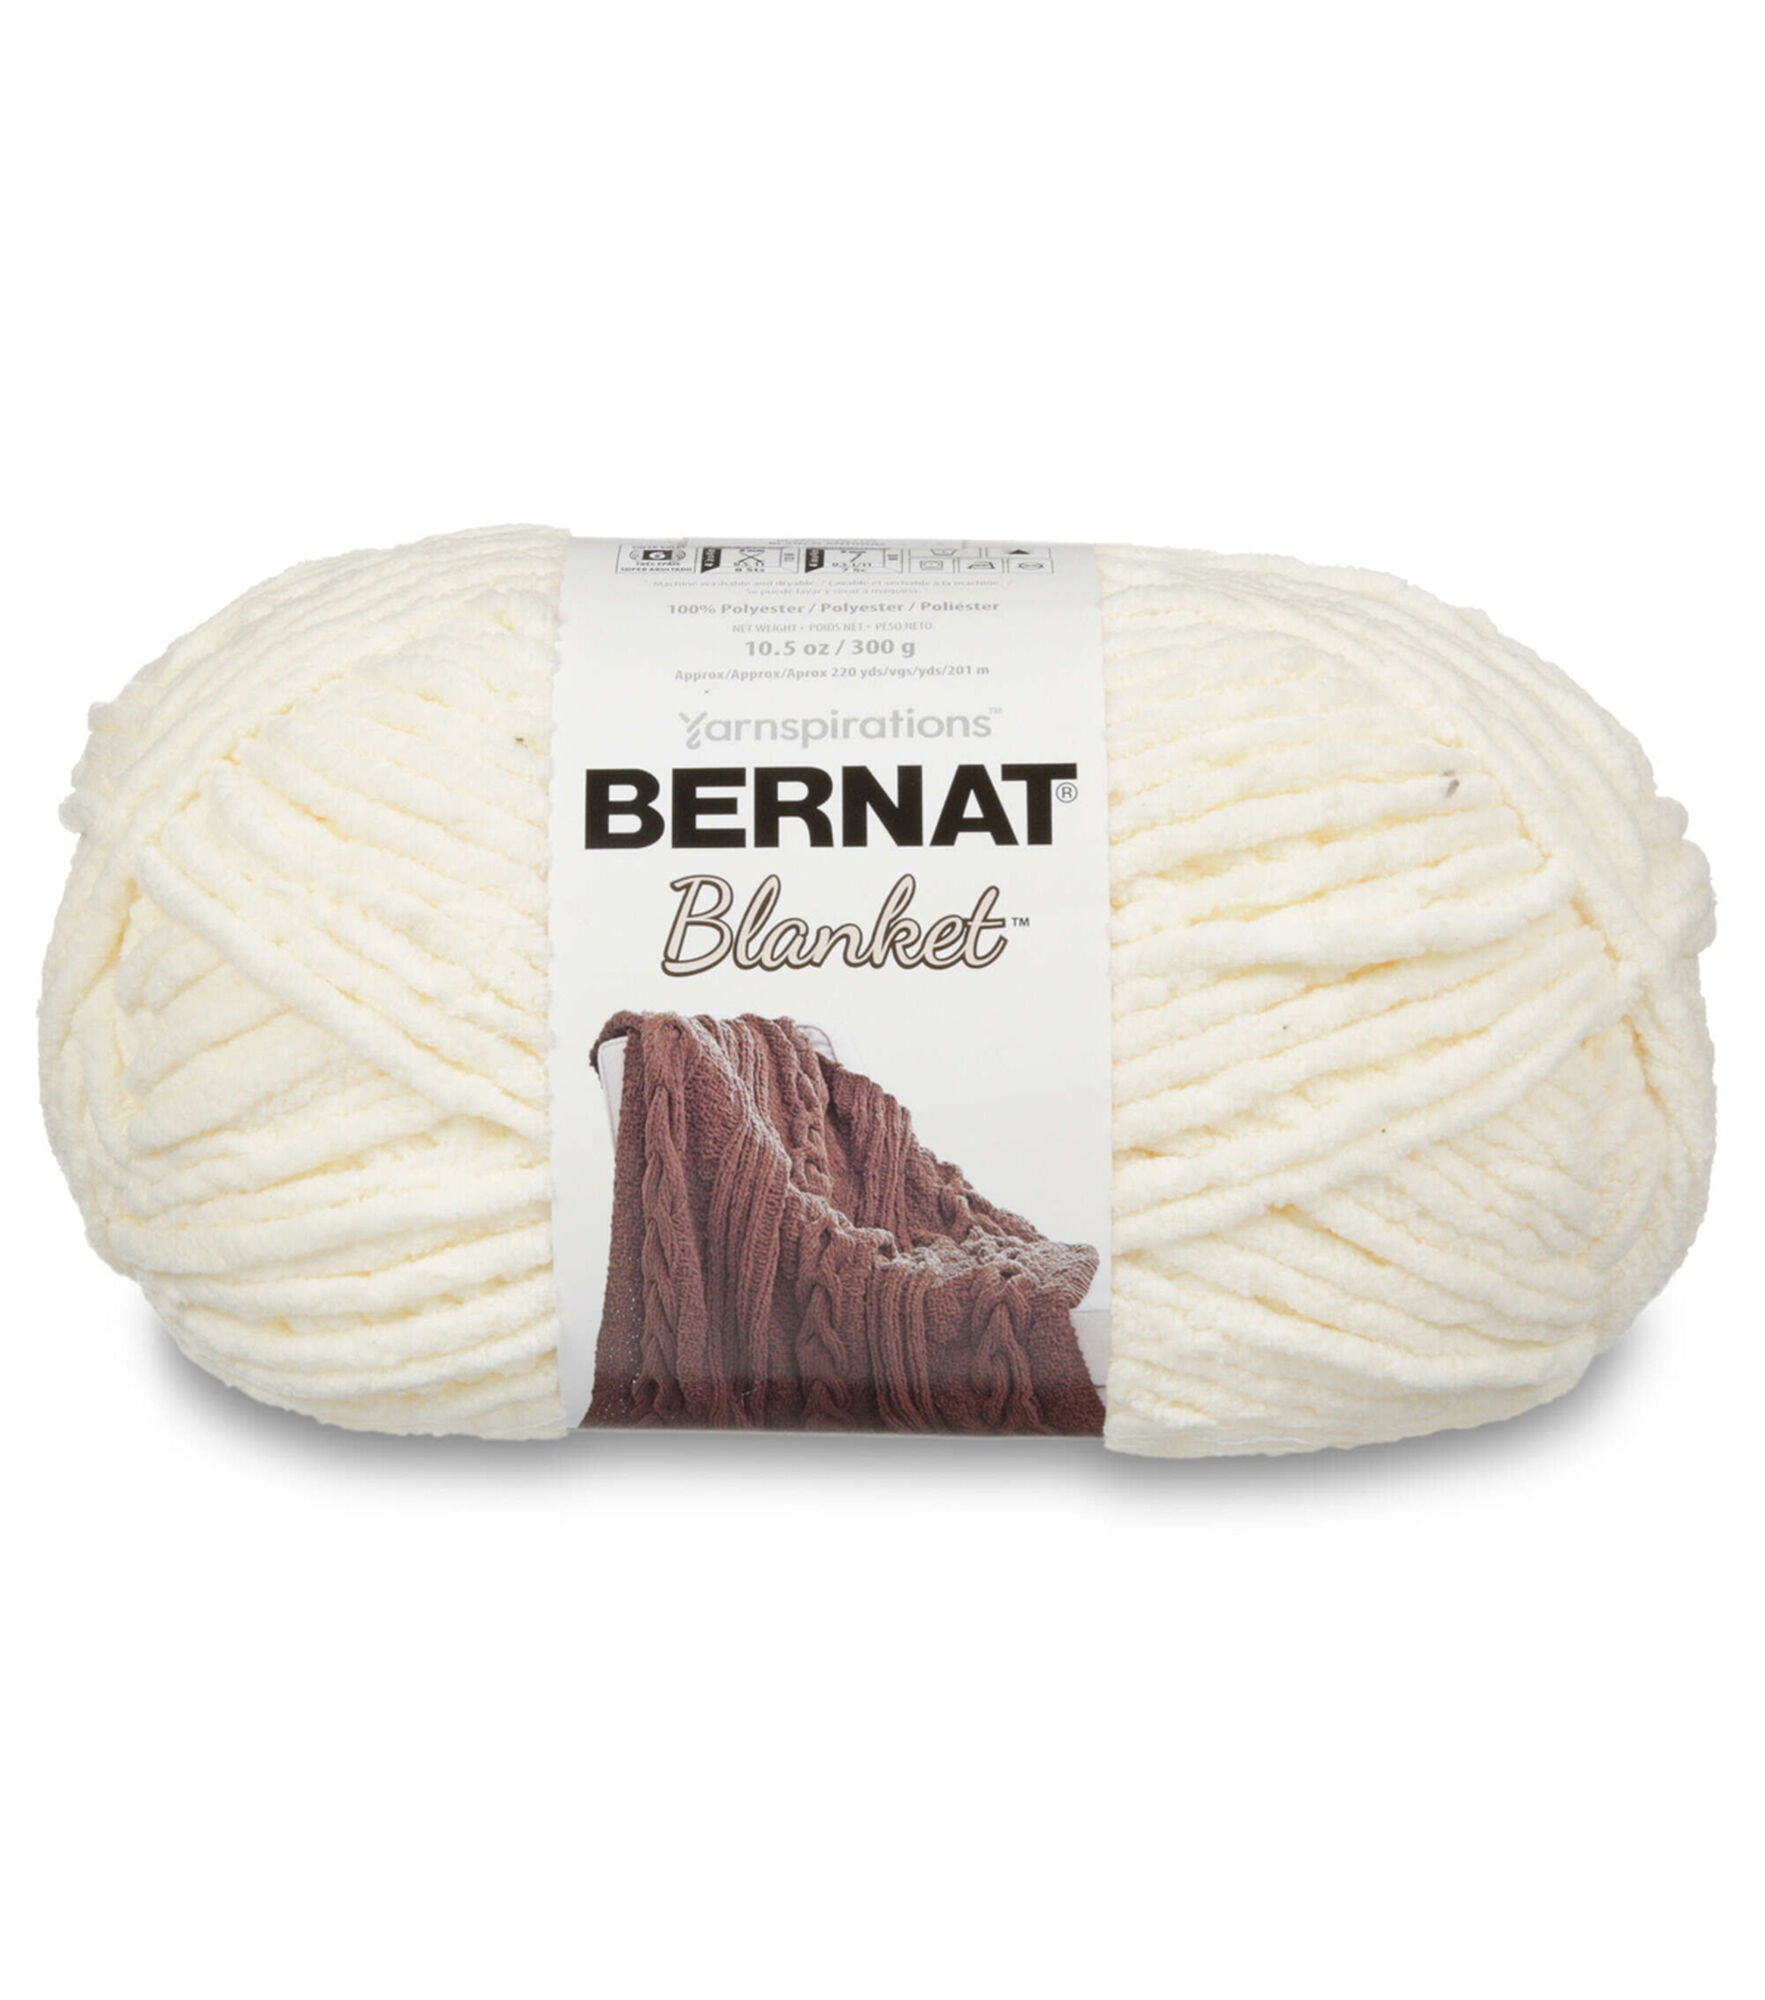 Bernat Blanket Big - All Colours - Wool Warehouse - Buy Yarn, Wool